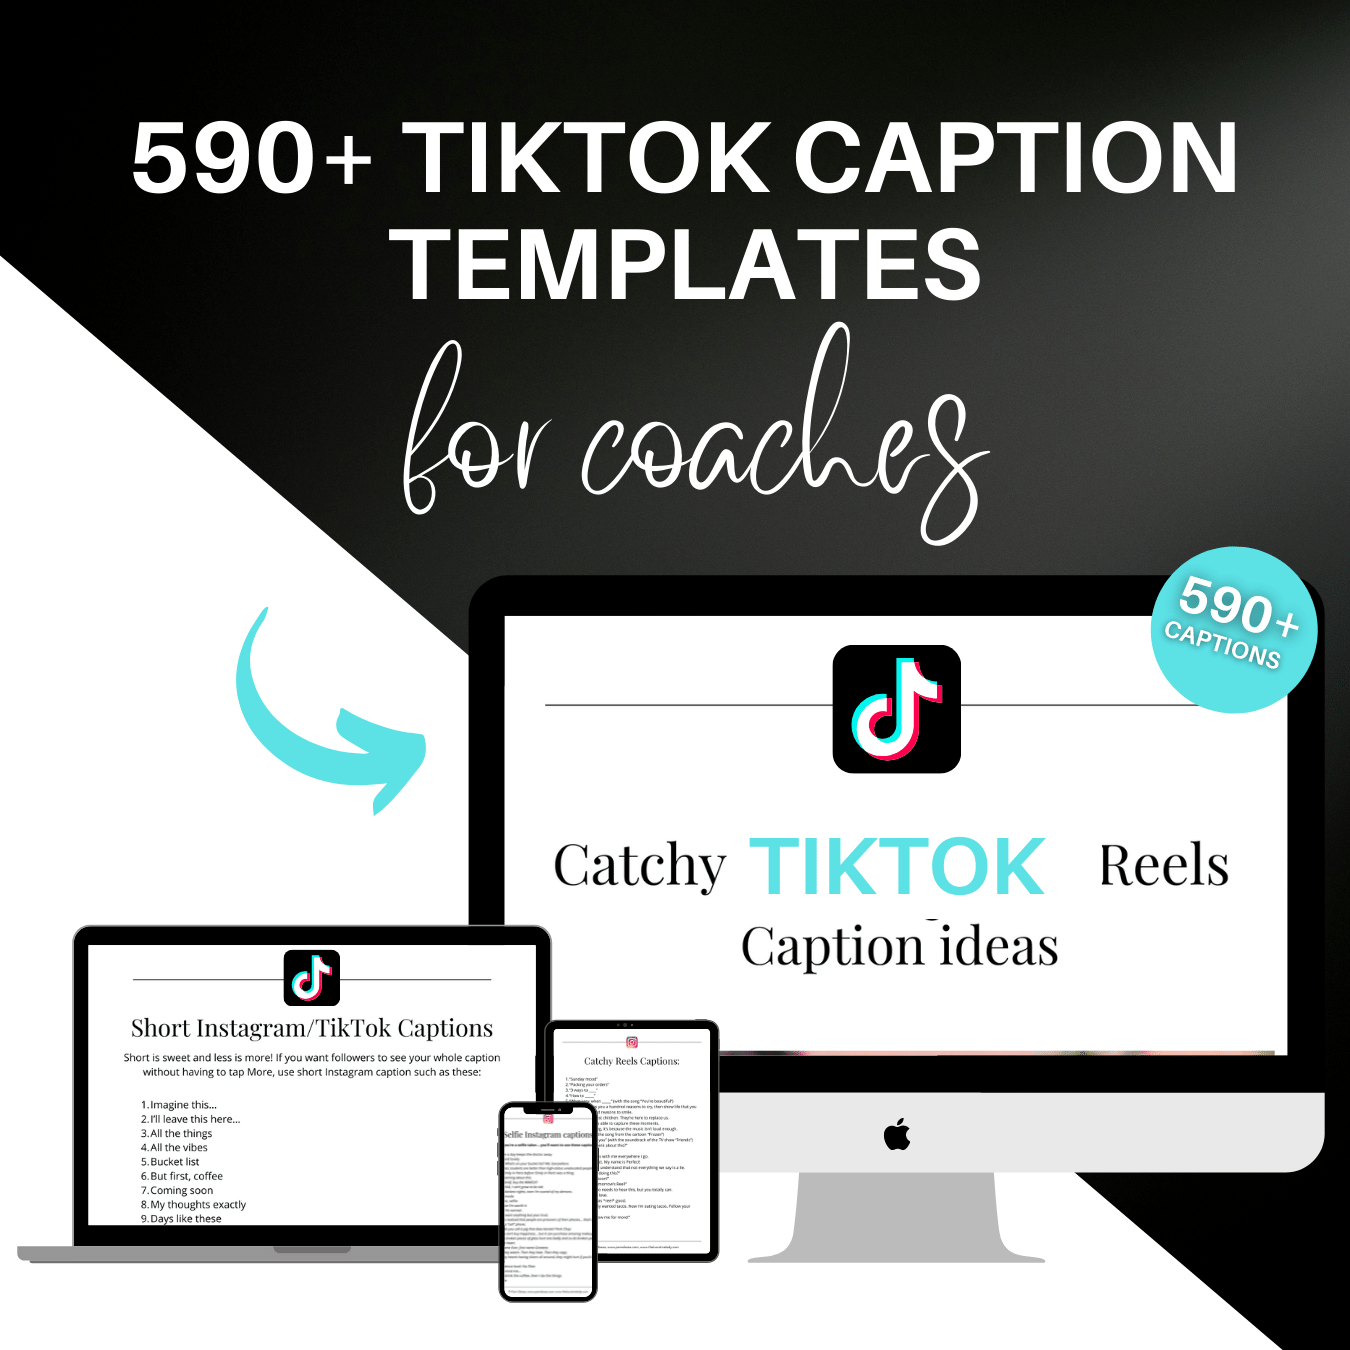 590+ TikTok Caption Template for coaches